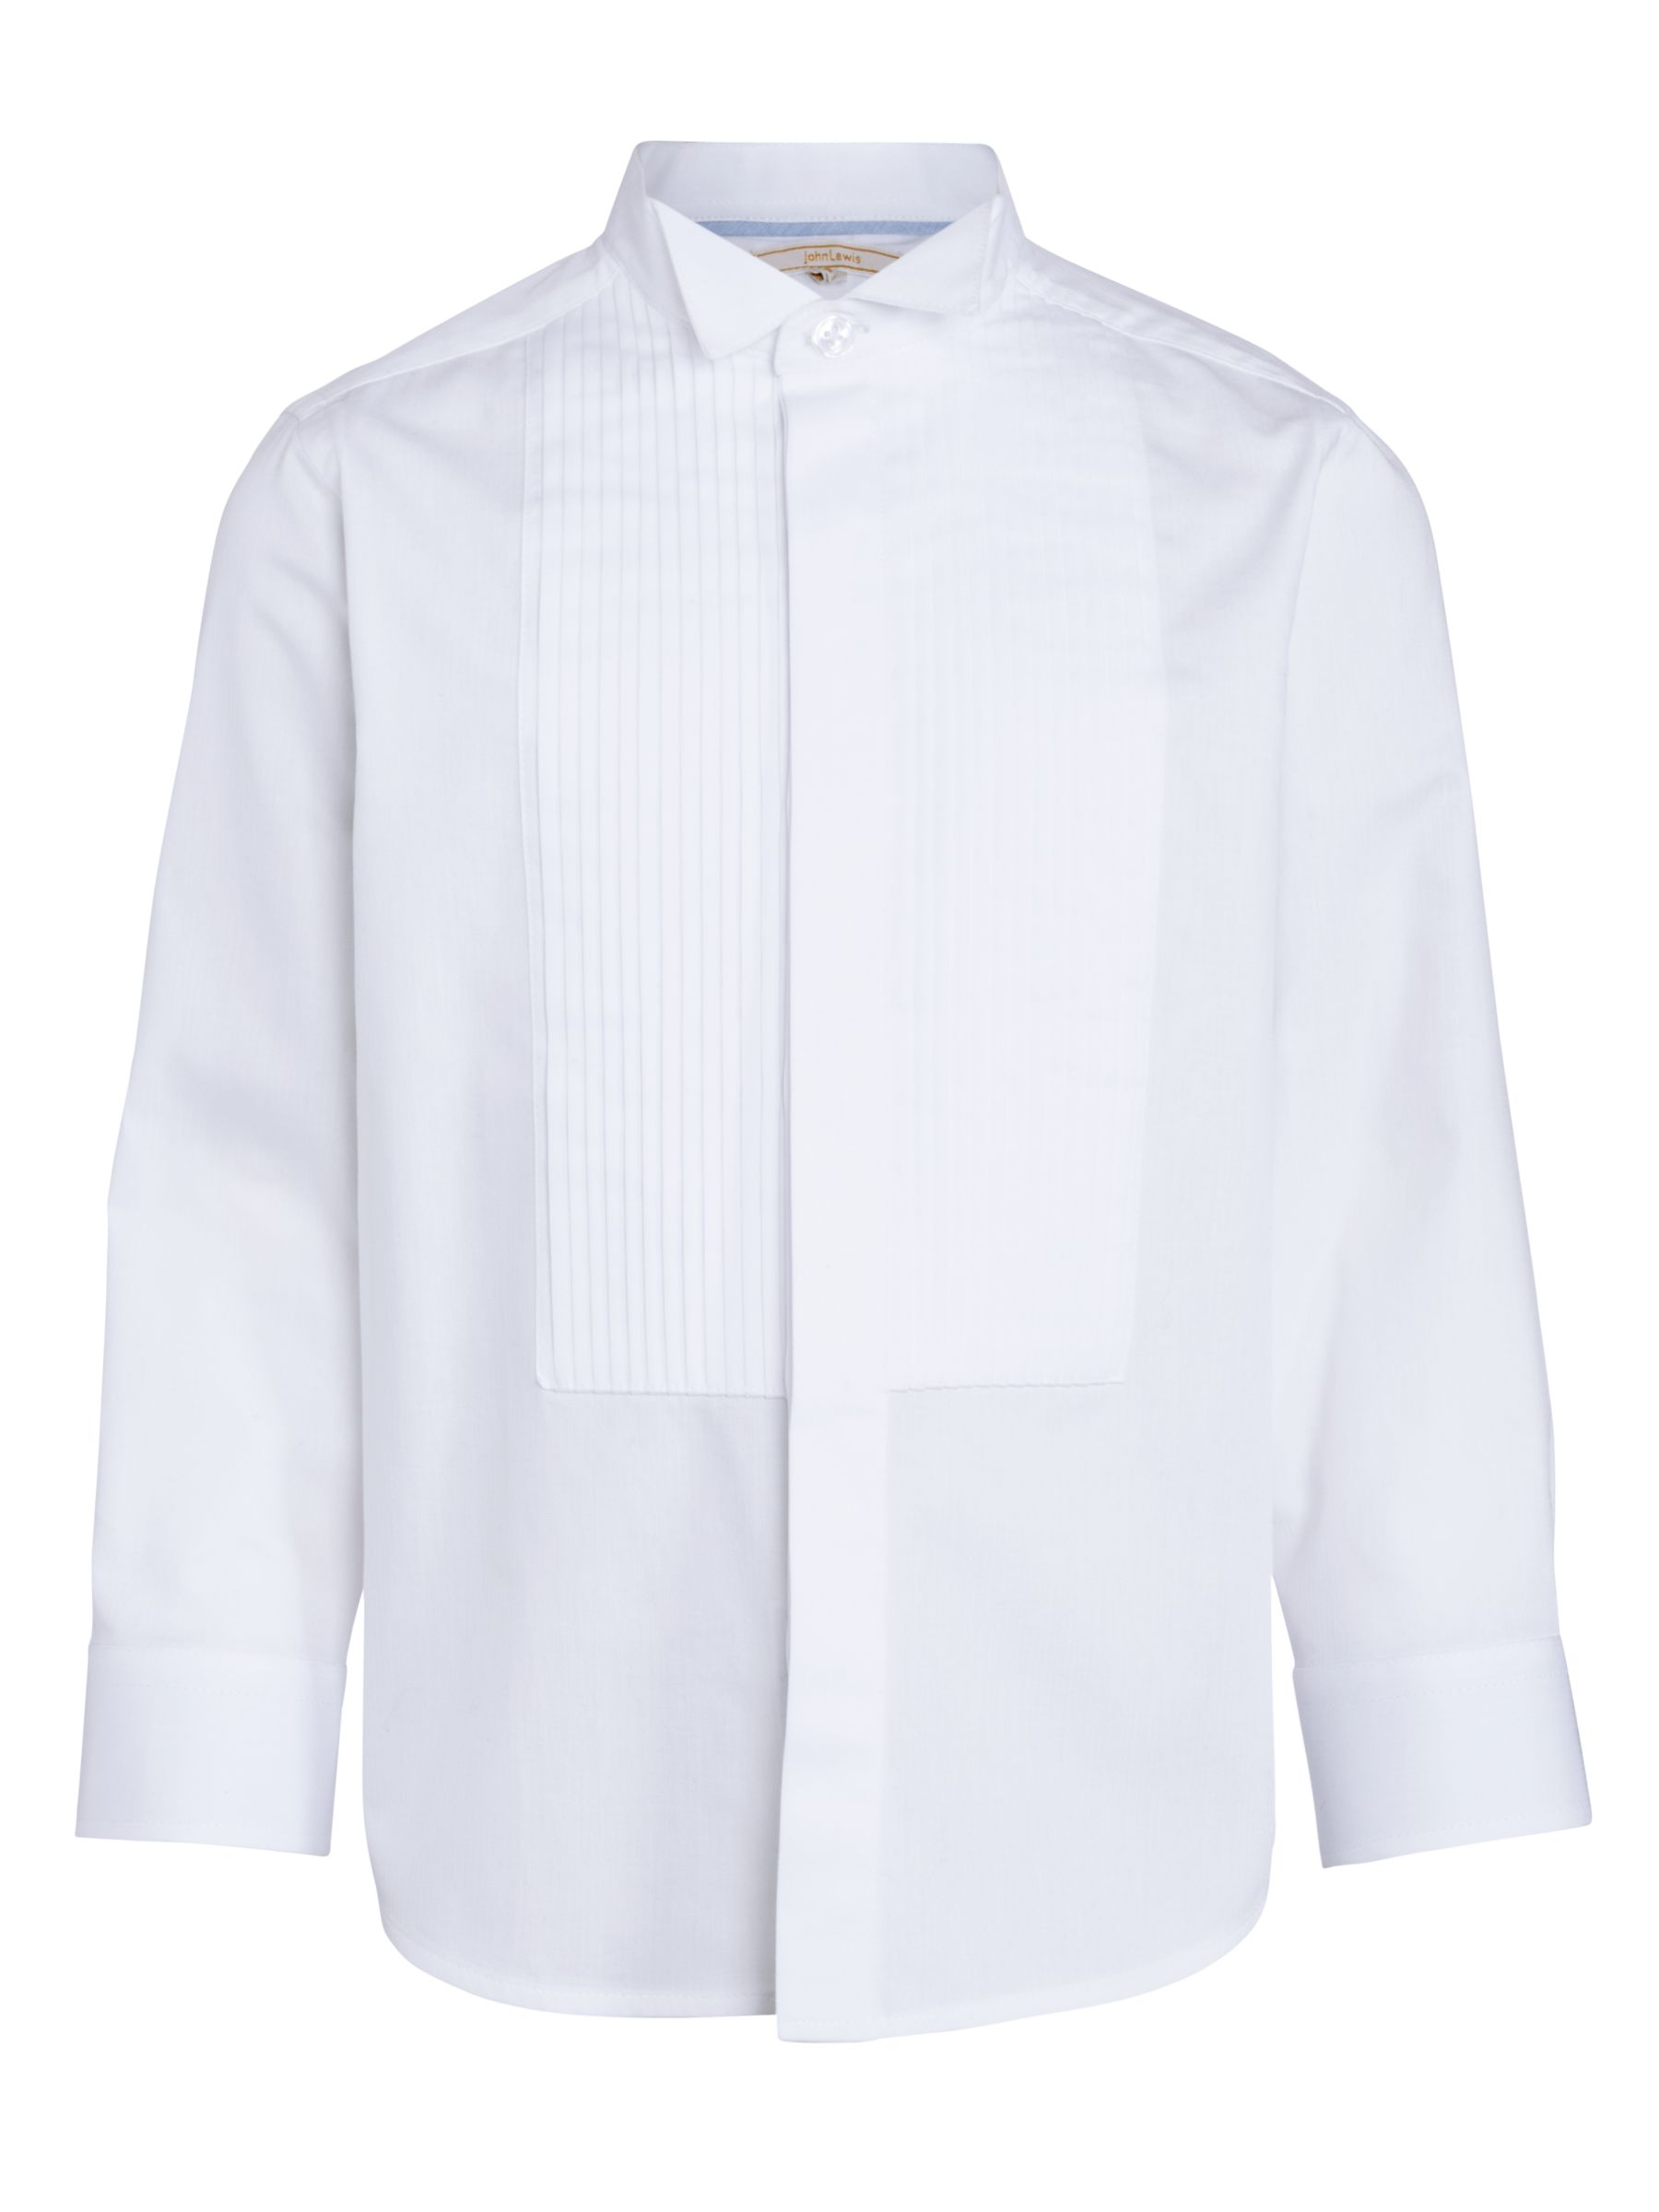 John Lewis Heirloom Collection Boys' Dress Shirt, White